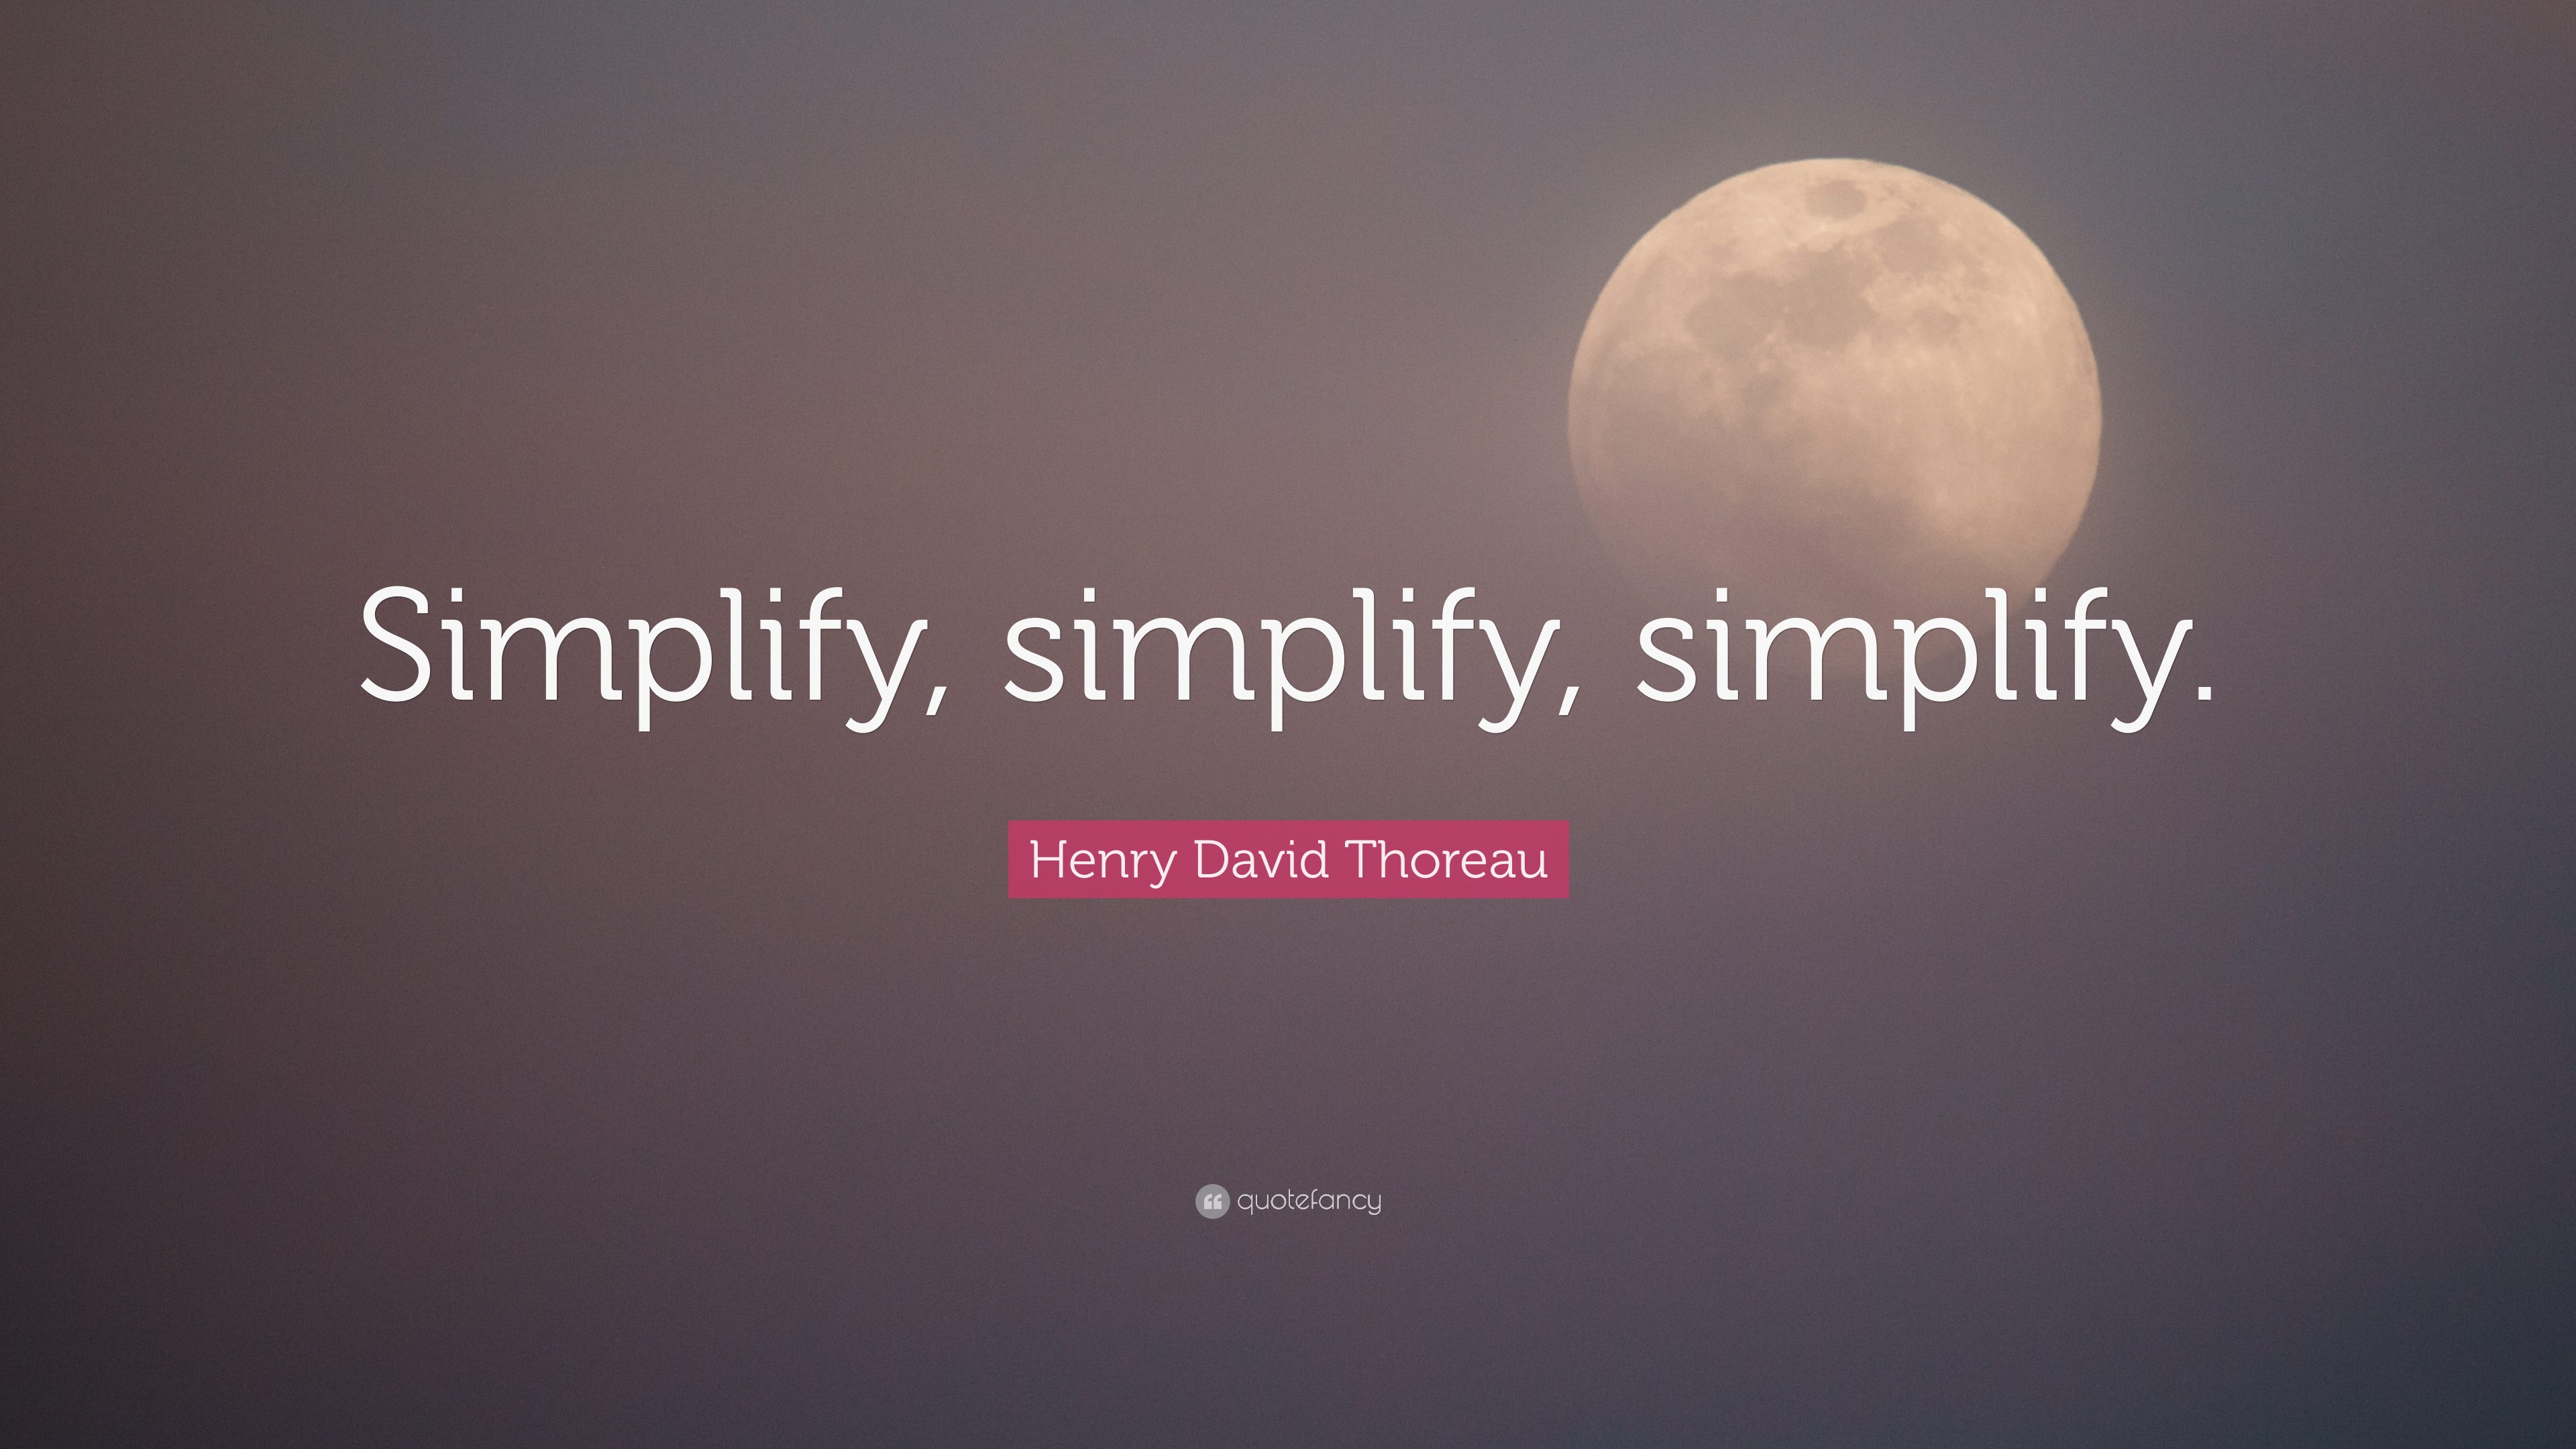 Henry David Thoreau Quote: “Simplify